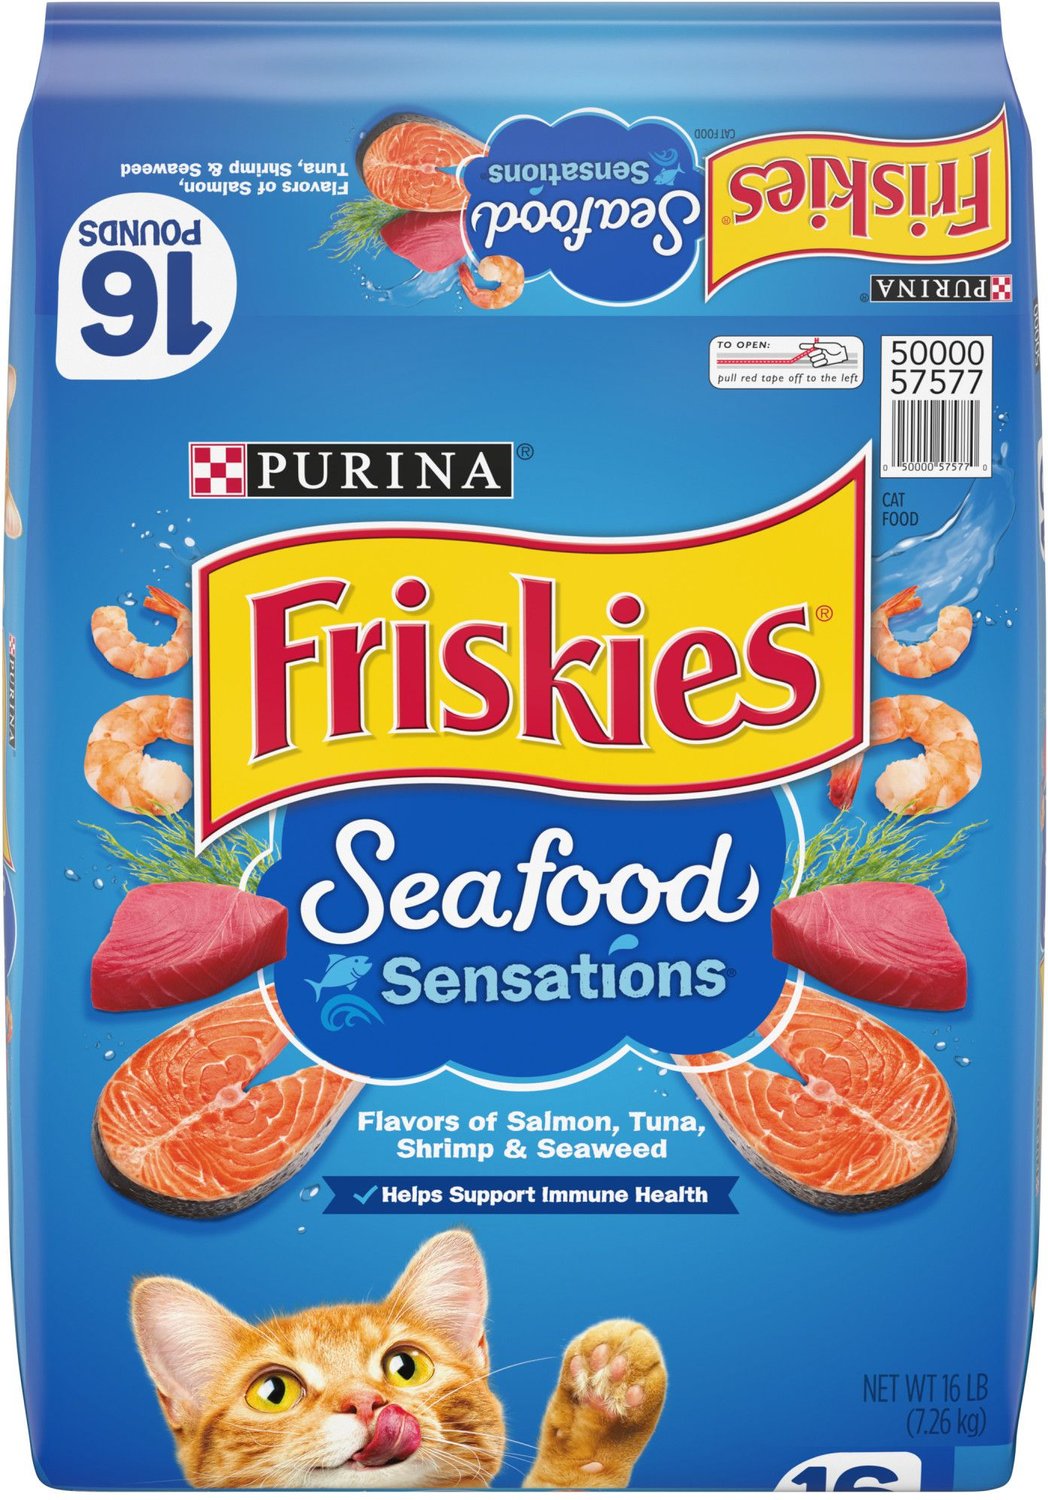 FRISKIES Seafood Sensations Dry Cat Food, 16lb bag